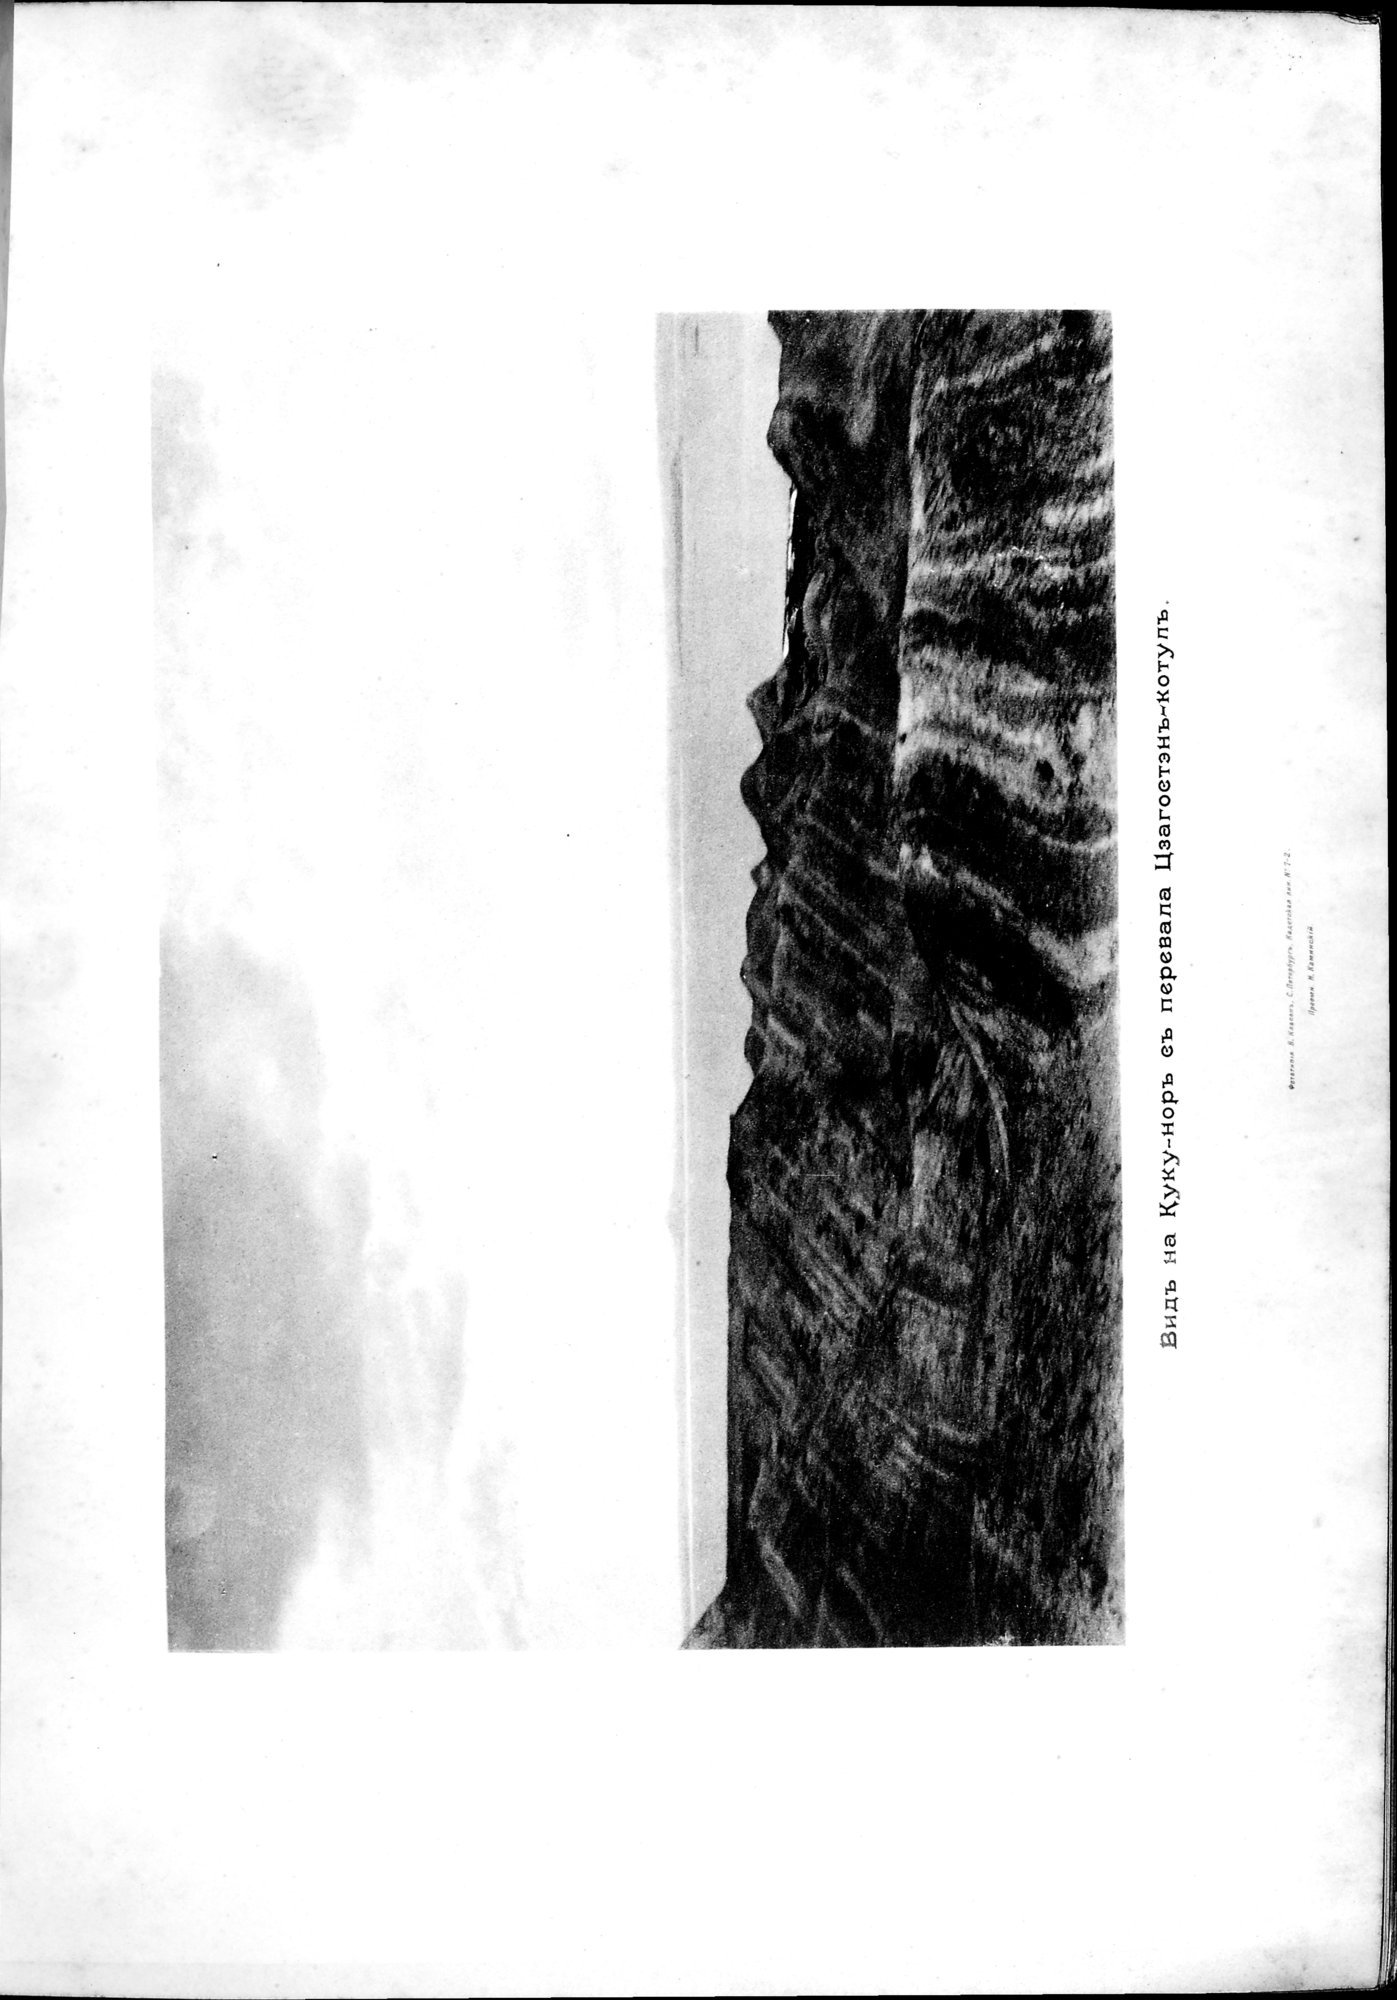 Mongoliia i Kam : vol.2 / Page 461 (Grayscale High Resolution Image)